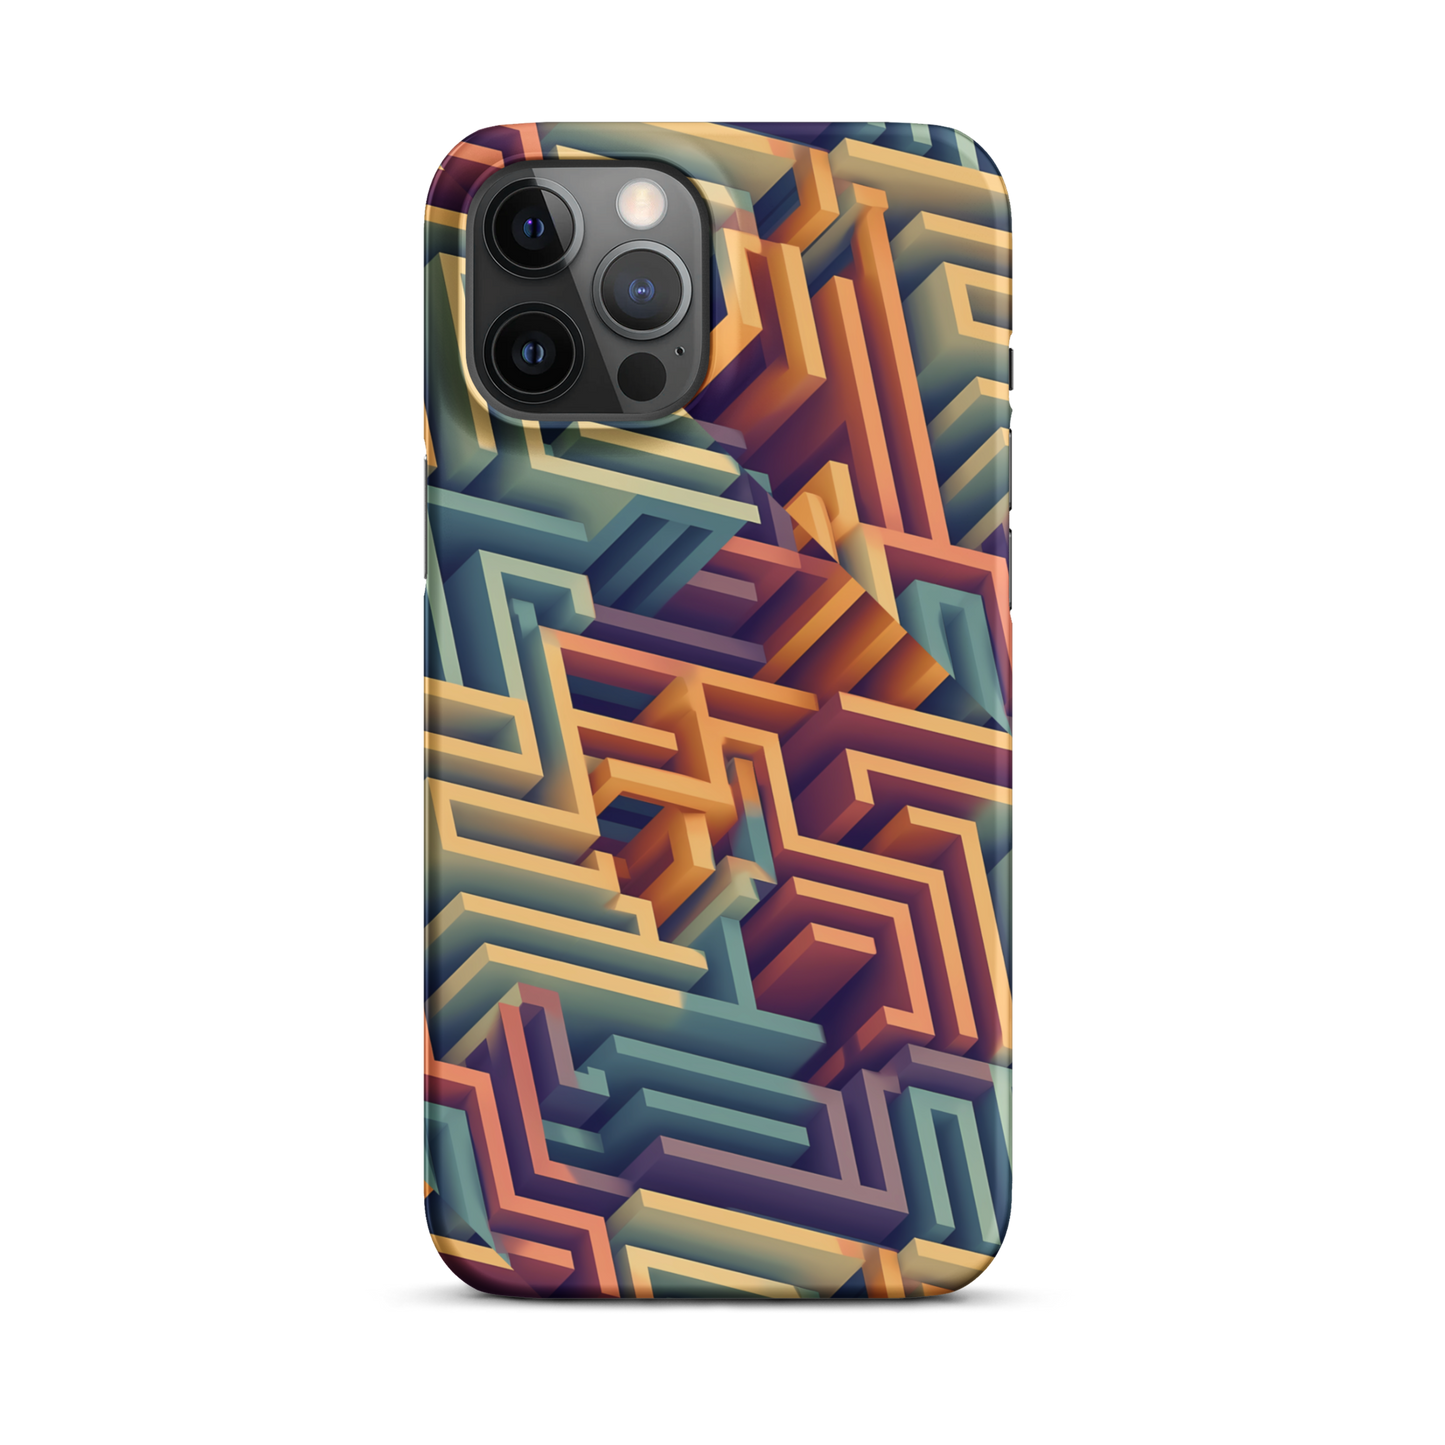 3D Maze Illusion | 3D Patterns | Snap Case for iPhone - #3